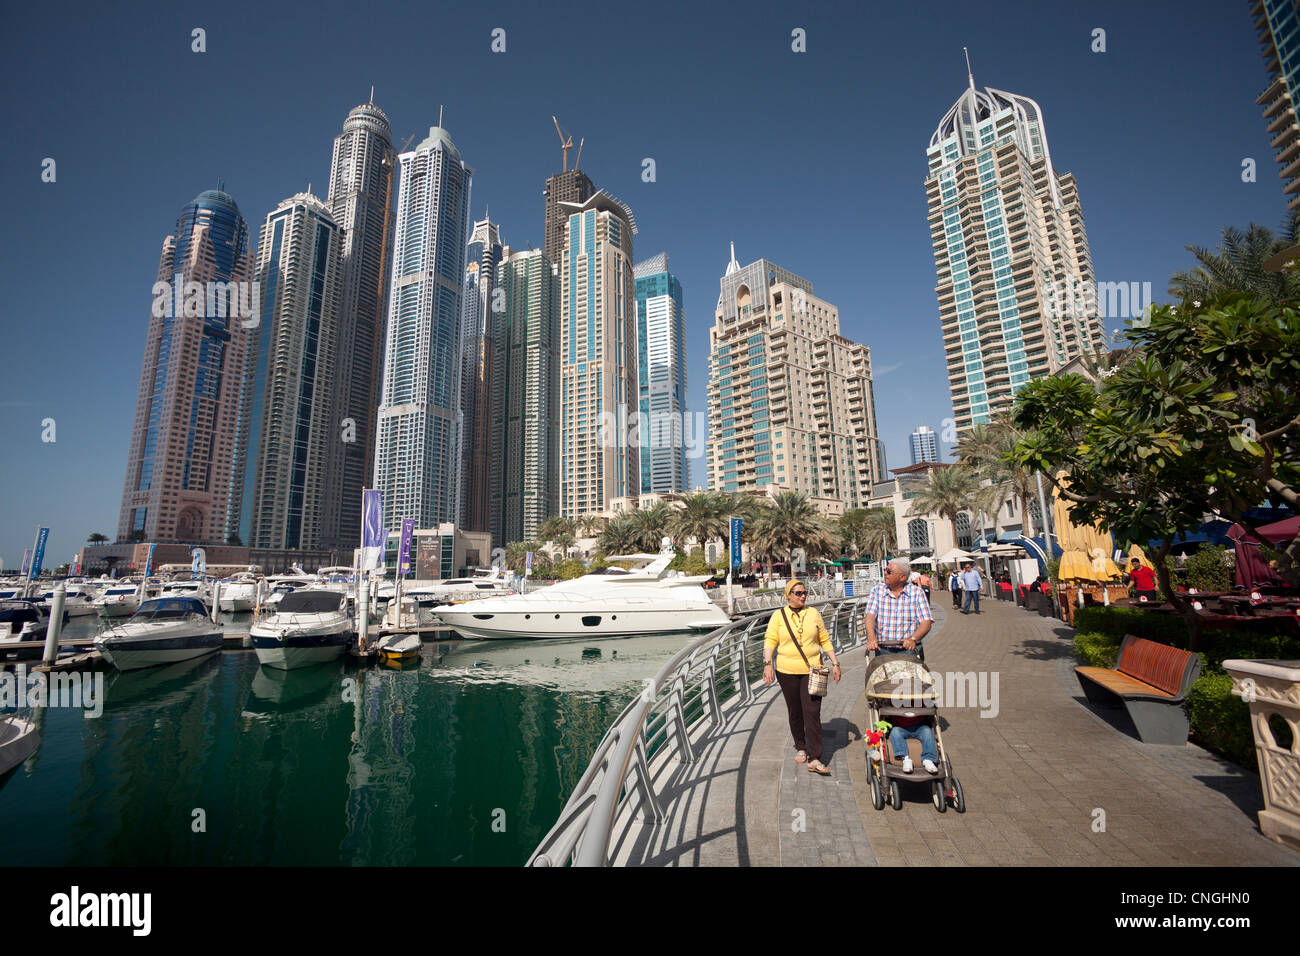 The skyscrapers of the 'Dubai Marina' area (Dubai - the United Arab Emirates). Les gratte-ciel du quartier de 'Dubaï Marina'. Stock Photo